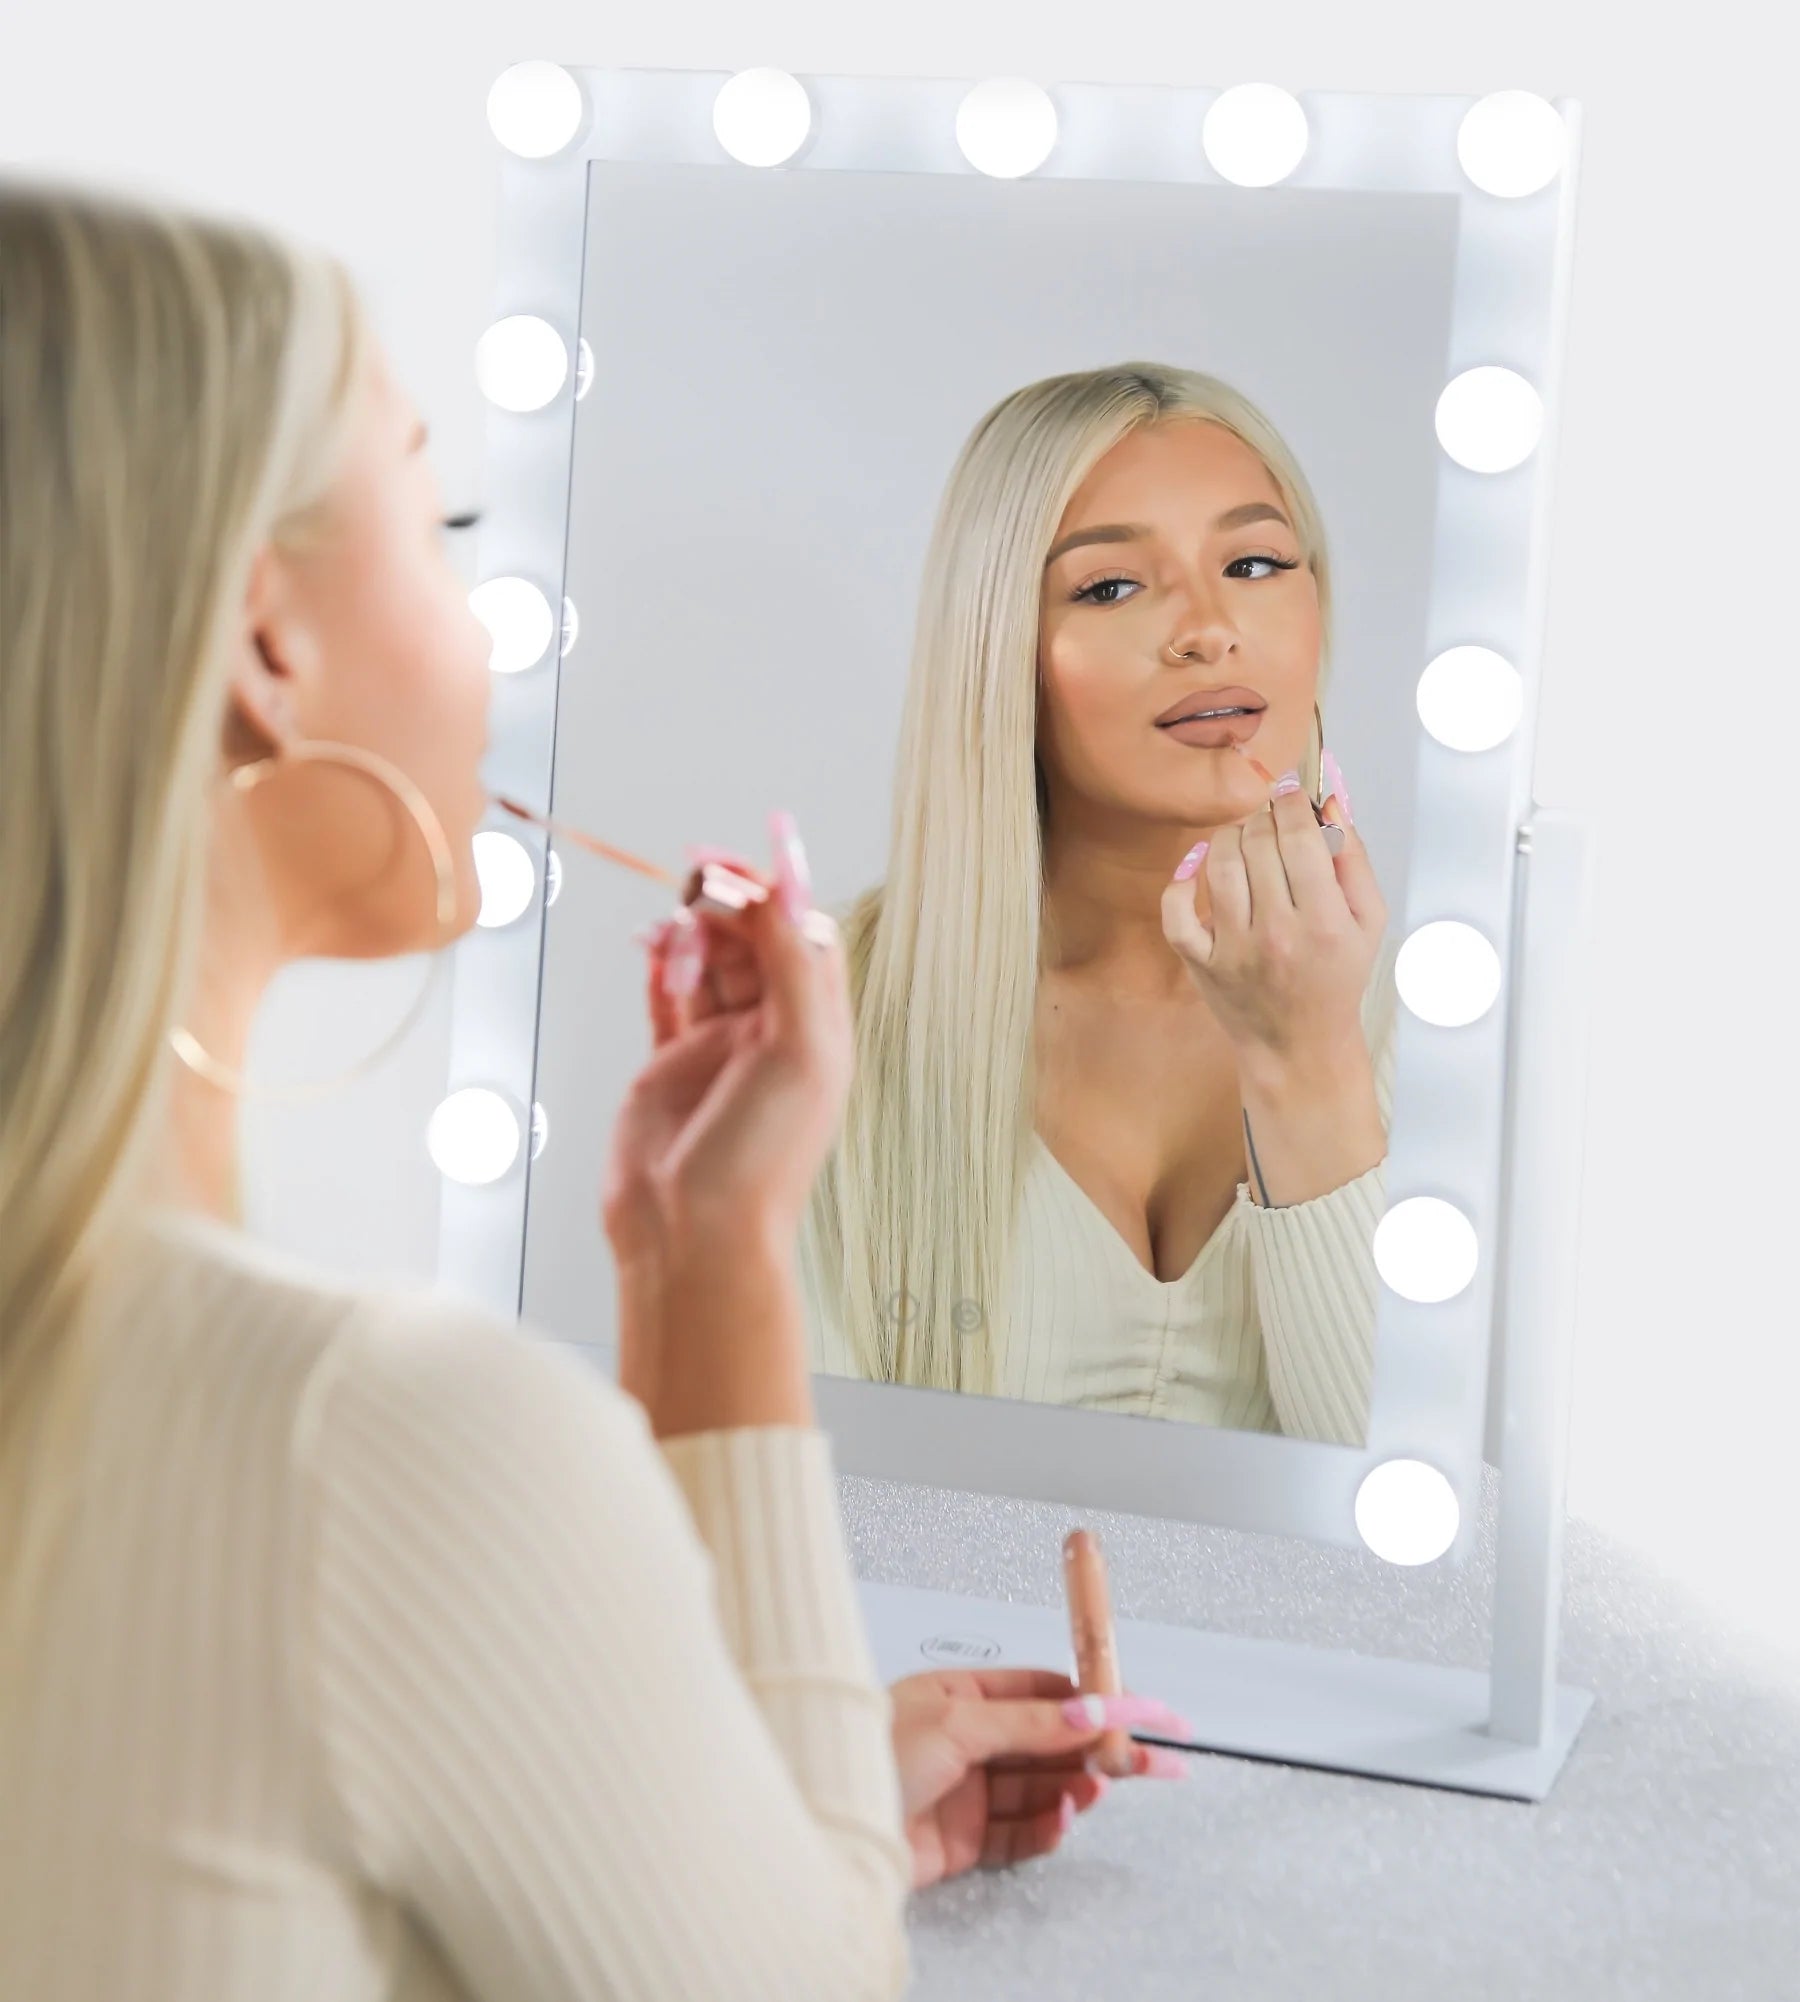 Lurella Cosmetics - 15 Bulb Vanity Mirror White